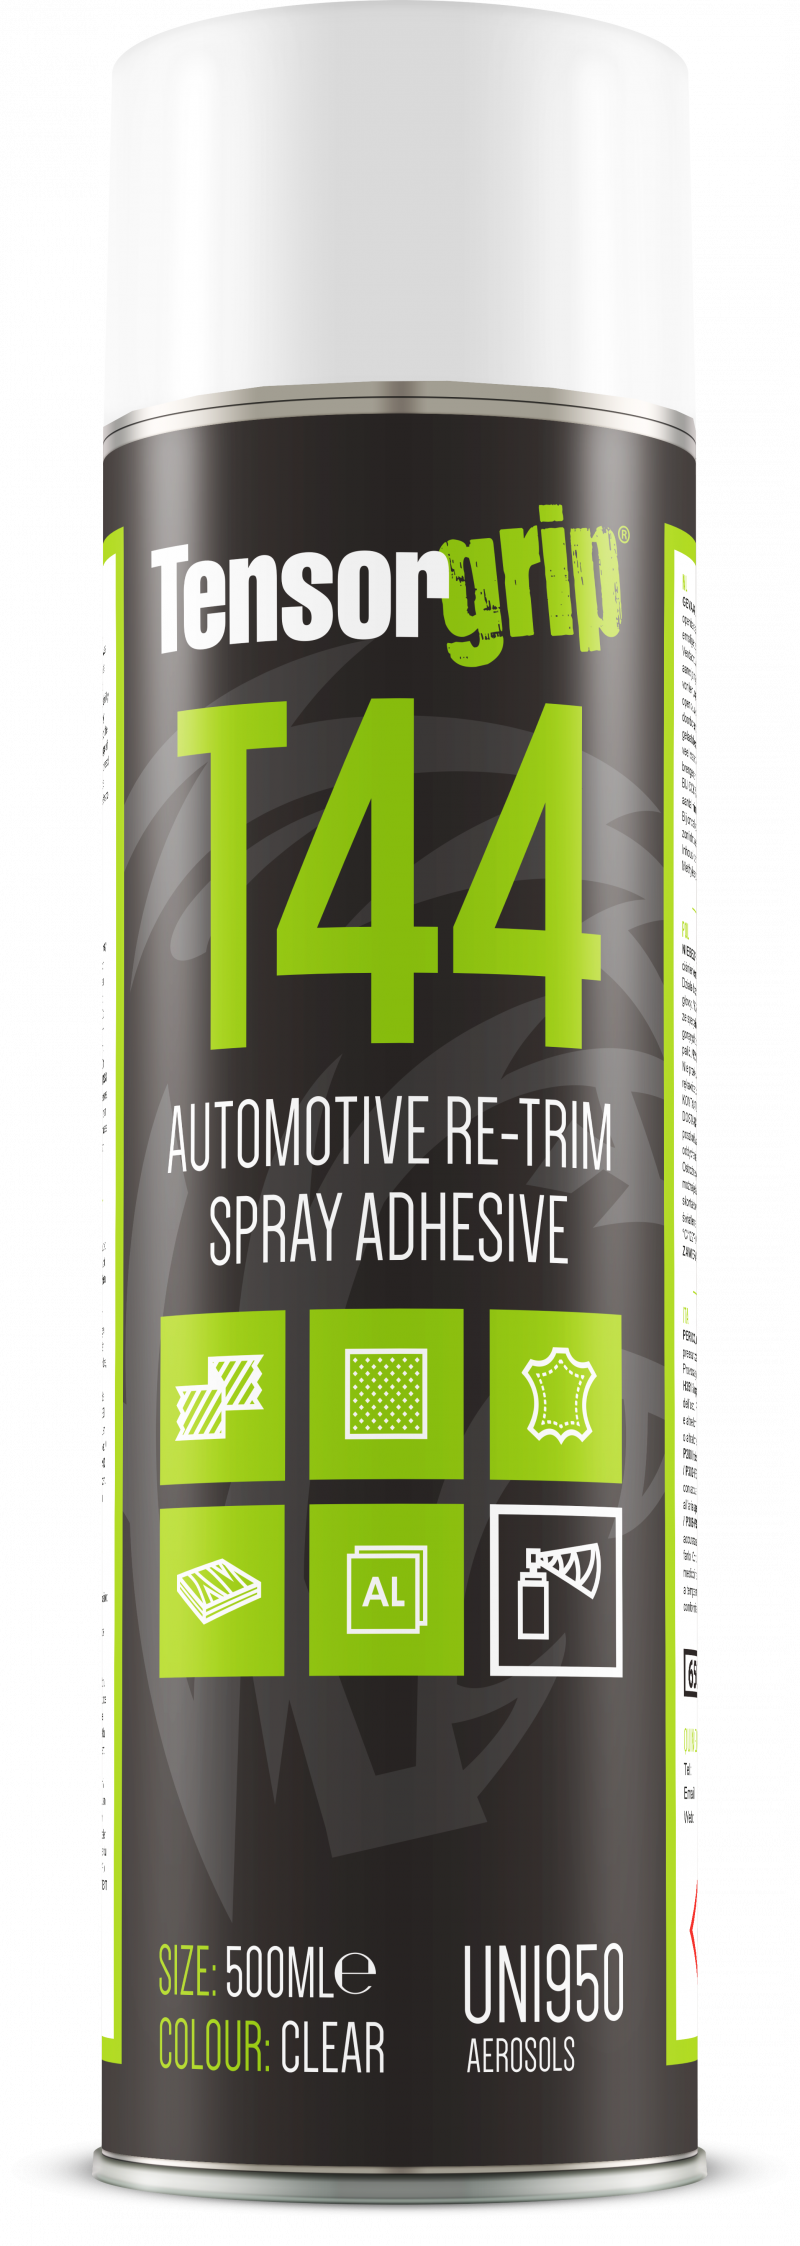 TensorGrip T44 Automotive Re-Trim Spray Adhesive